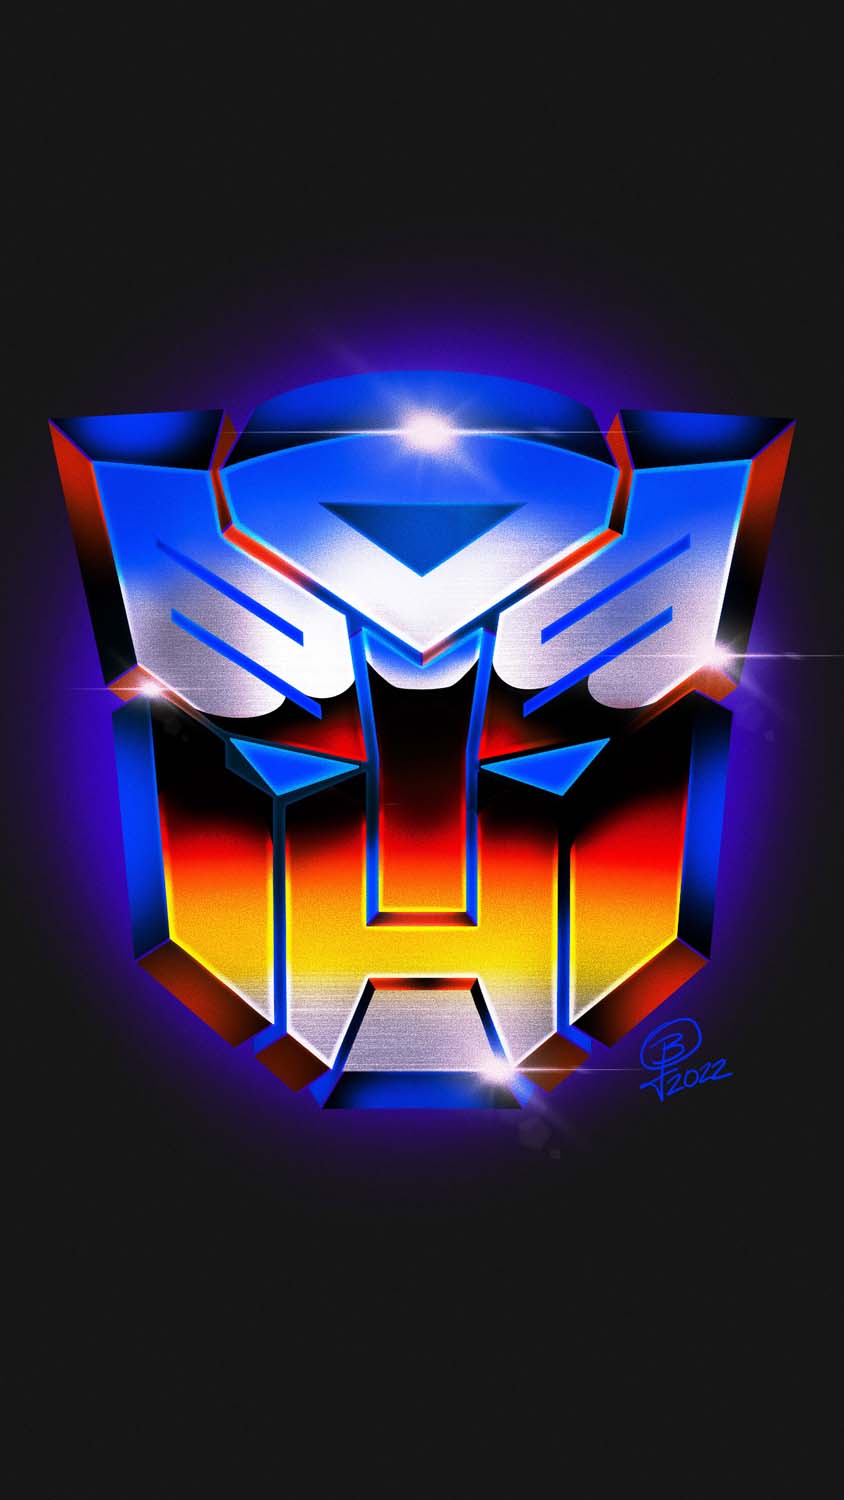 Autobots Transformers Logo iPhone Wallpaper HD